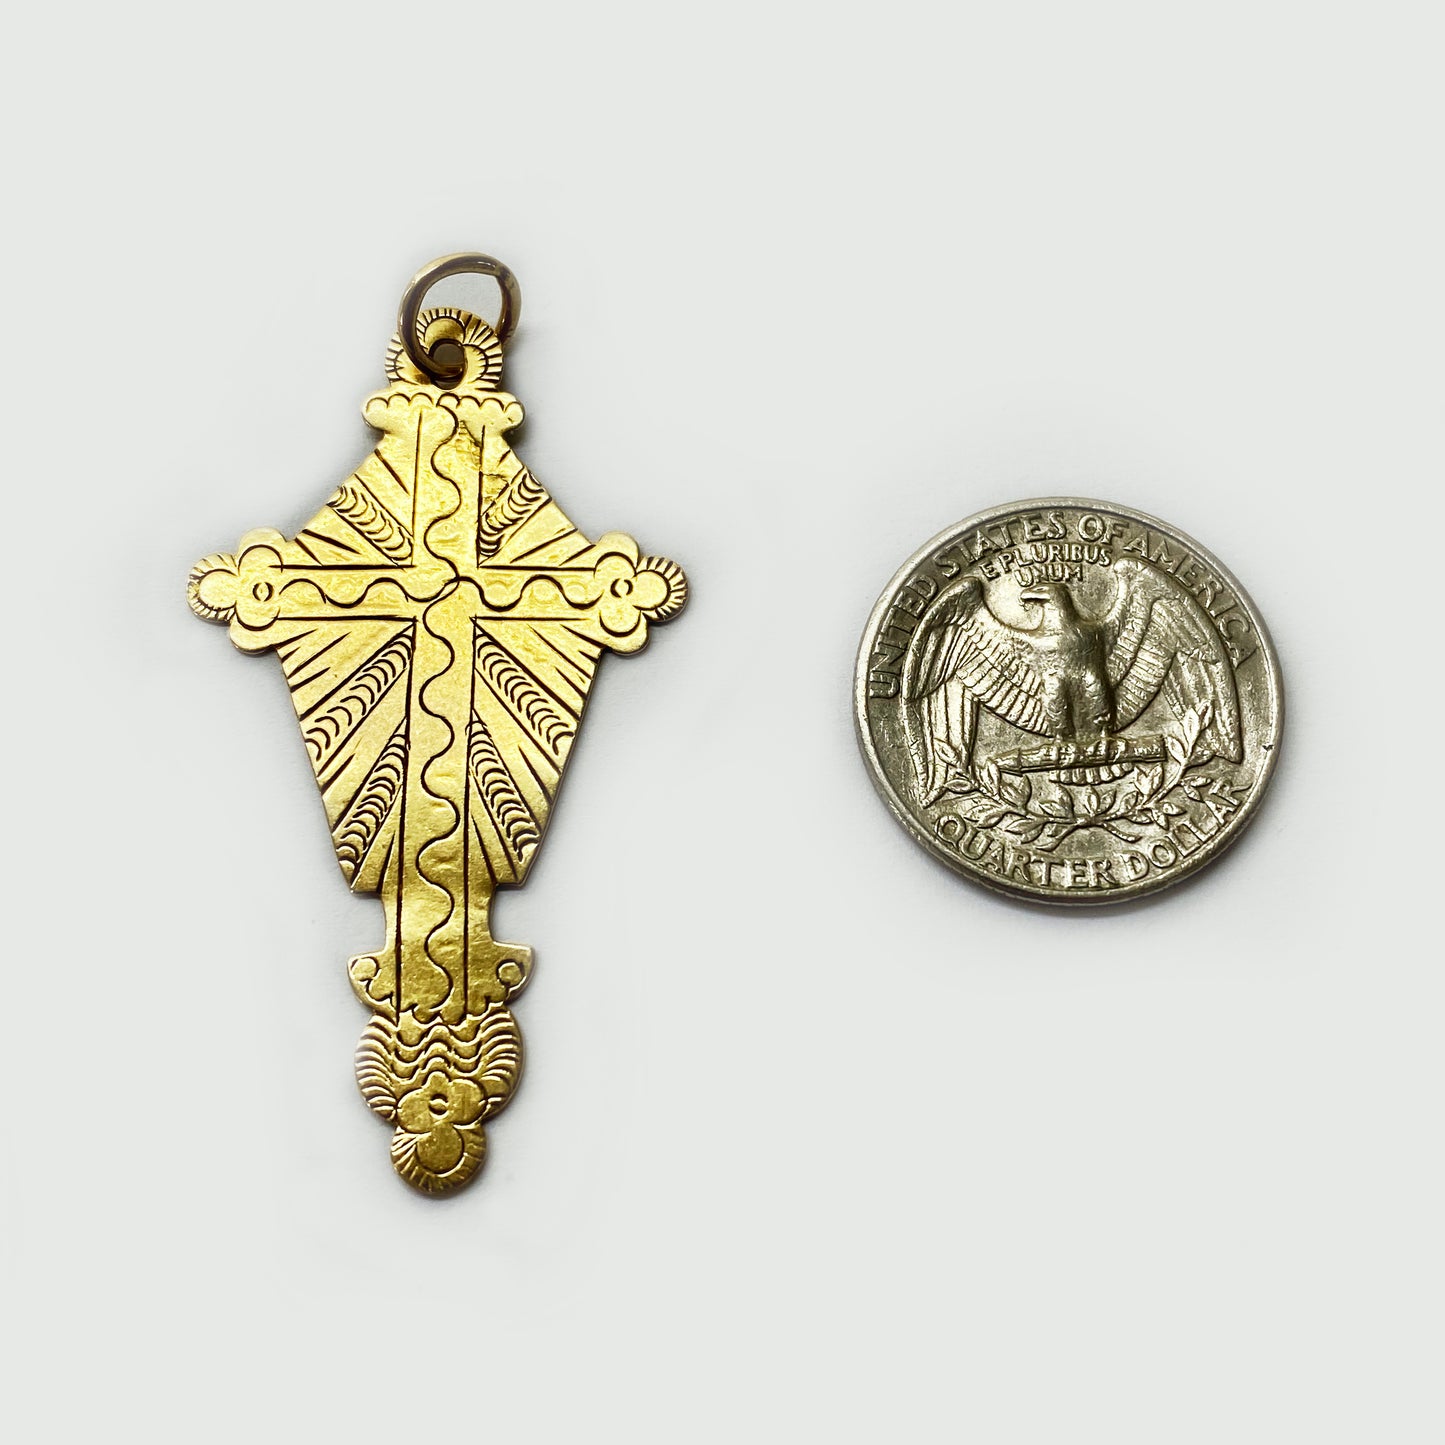 Antique 18k Gold Georgian / Early Victorian Cross